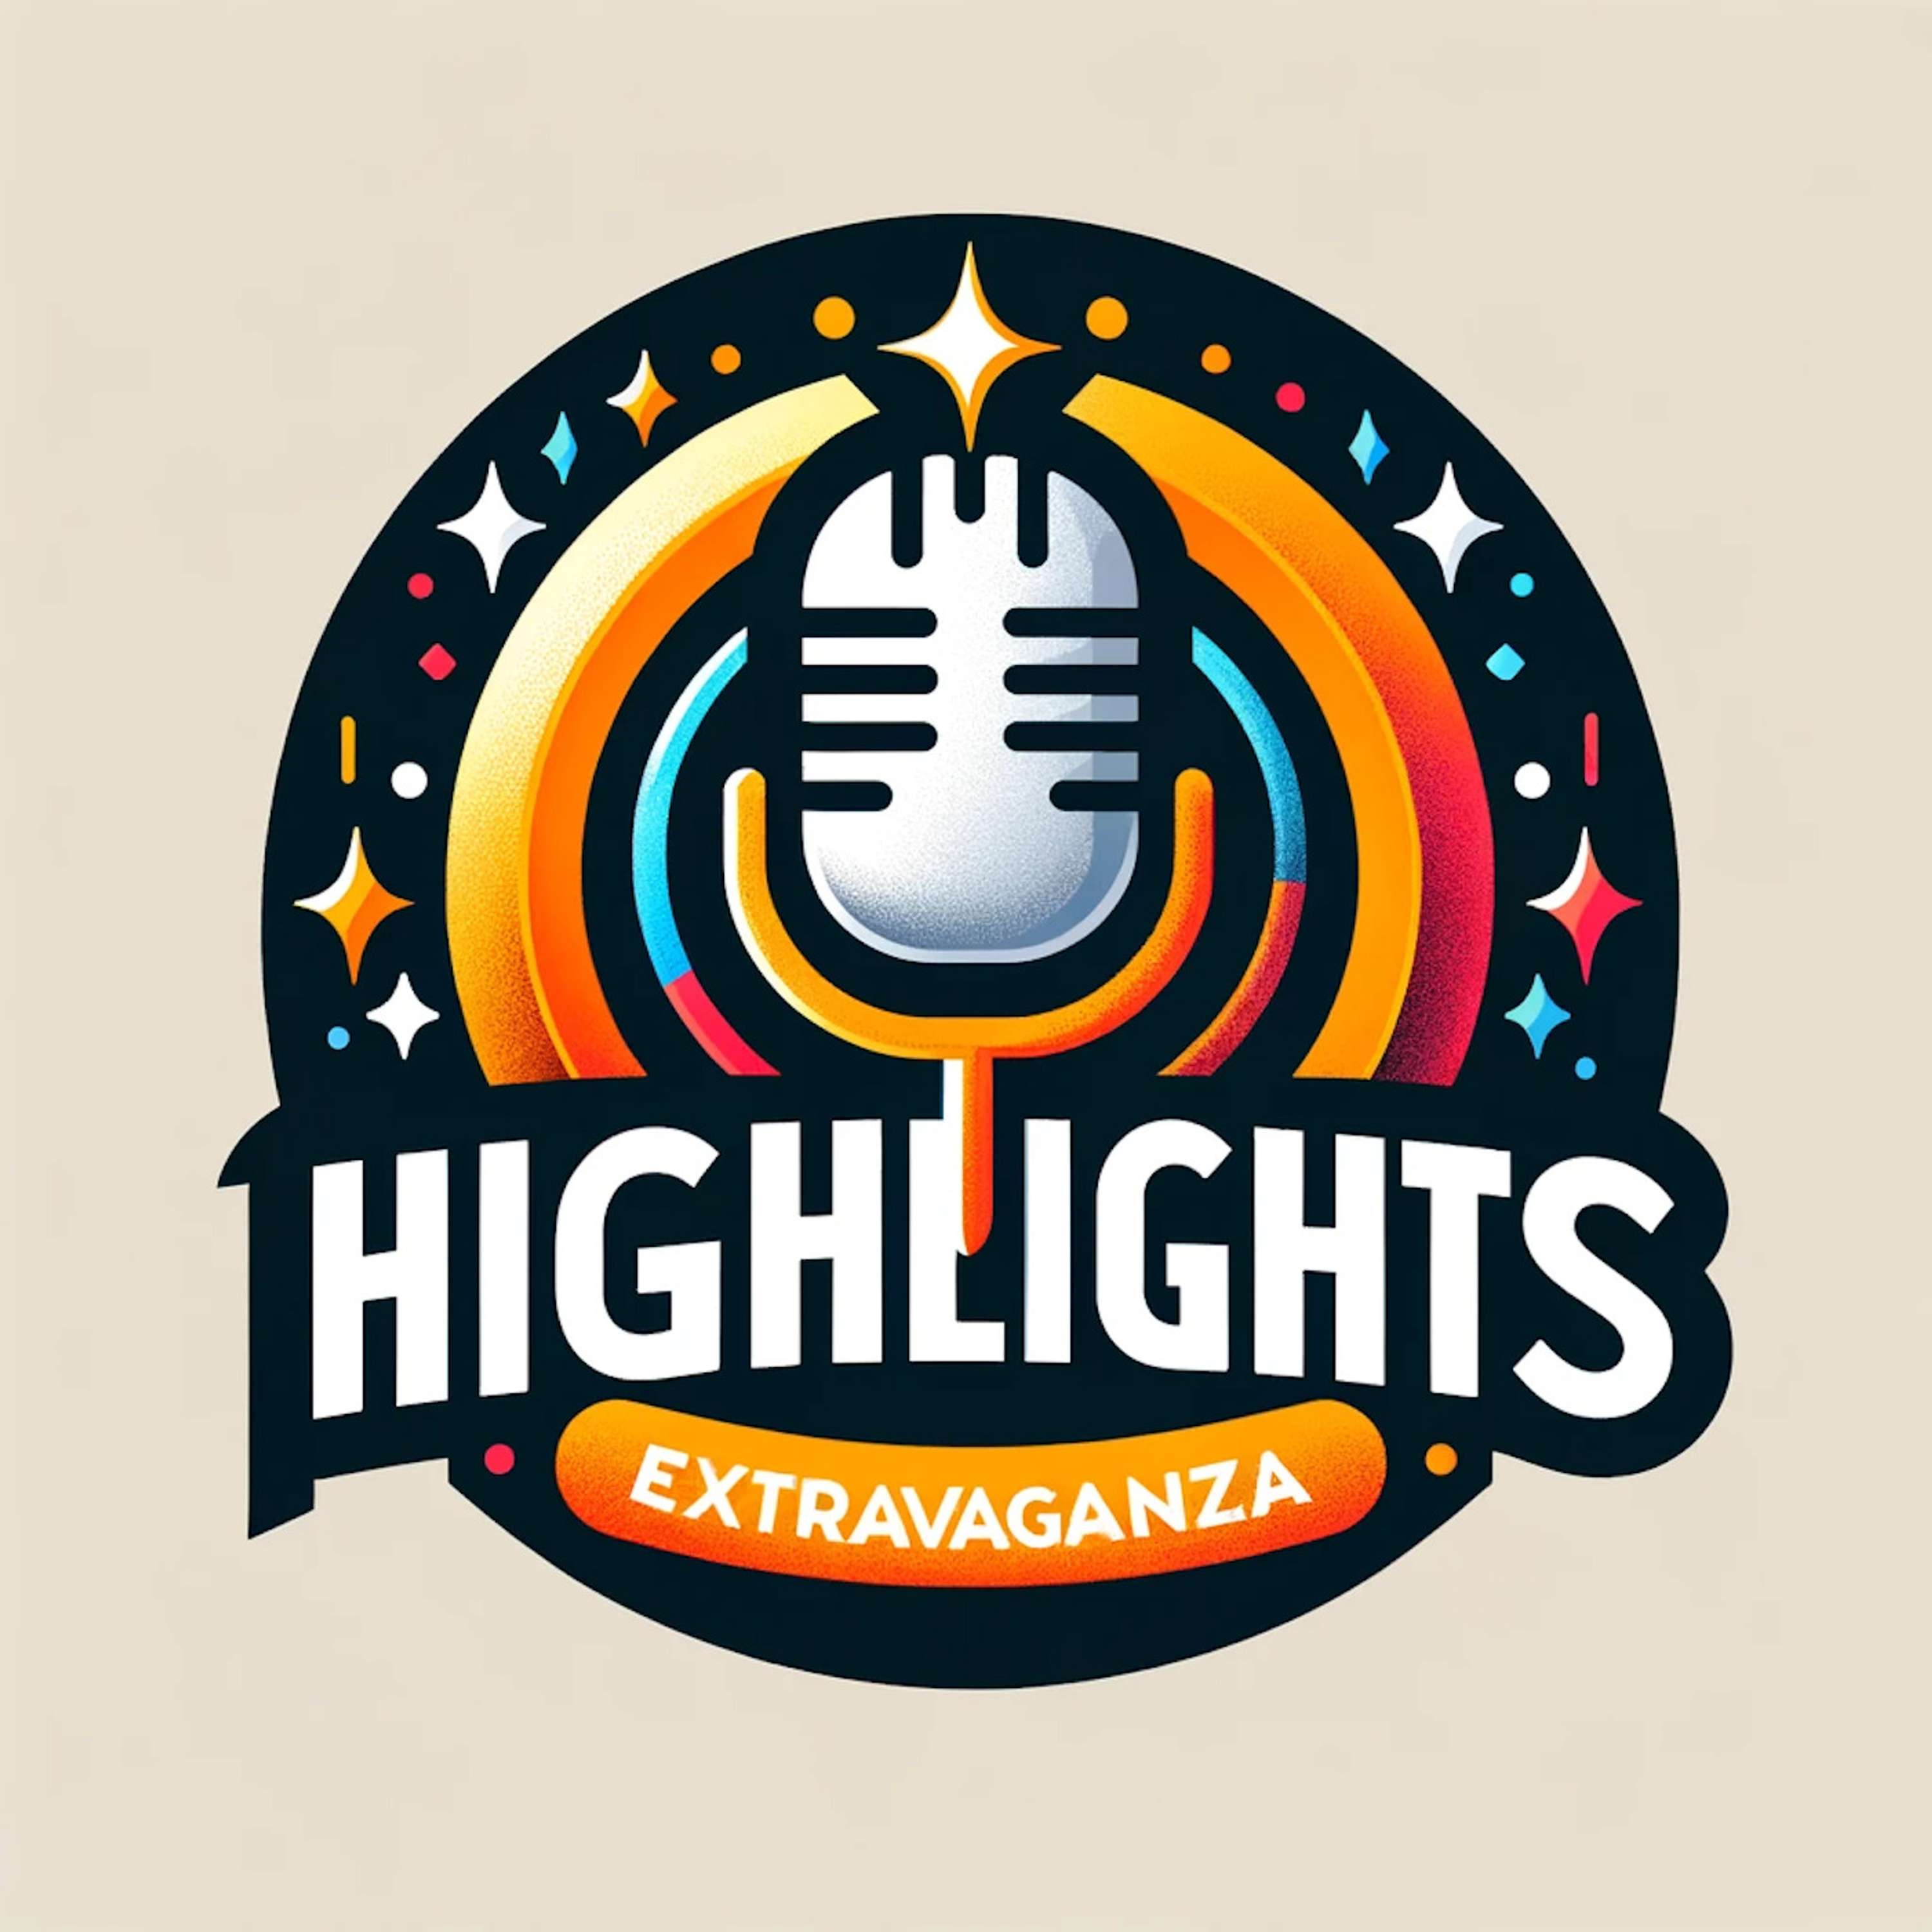 2023 Mega-highlights Extravaganza